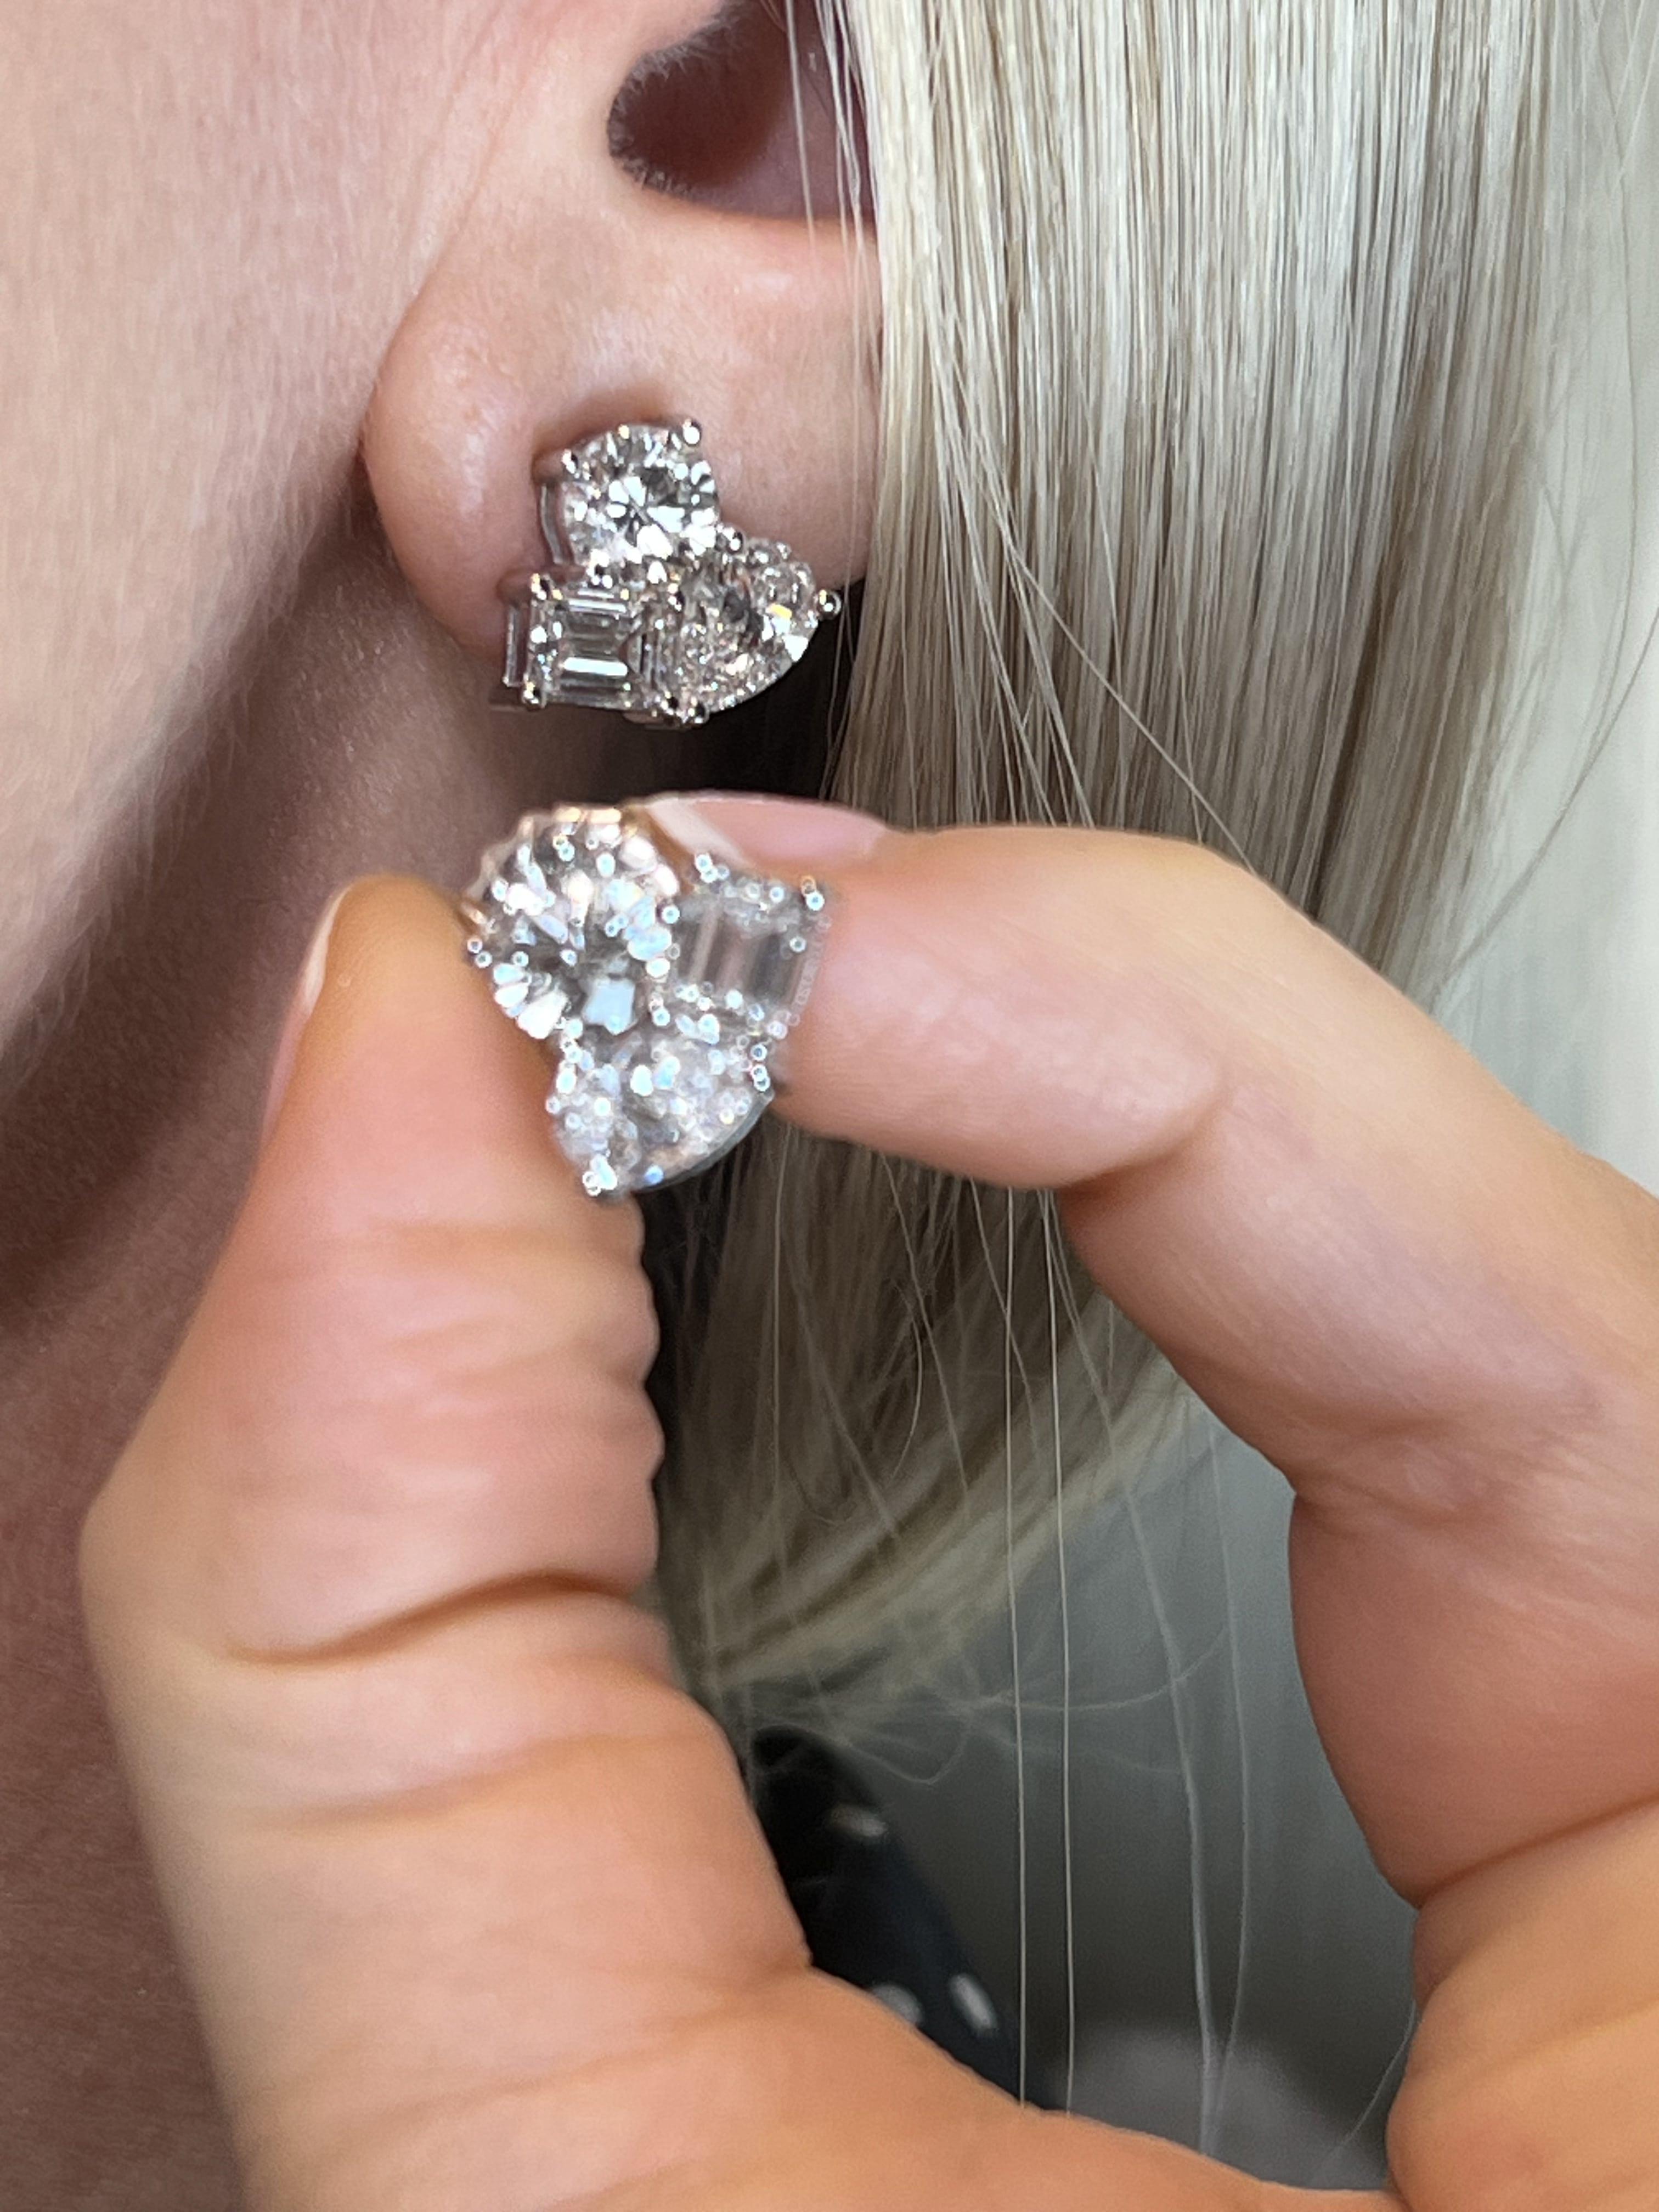 Dakota's Shiny Diamond Earrings

Earring Information
Diamond Type : Natural Diamond
Metal : 18k
Metal Color : White Gold
Diamond Carat Weight : 1.02ttcw
Diamond Color-Clarity : VS1
Diamond Color : G
Dimensions : 6.31- 6.27 x 4.10 mm 
Shape/Cut :